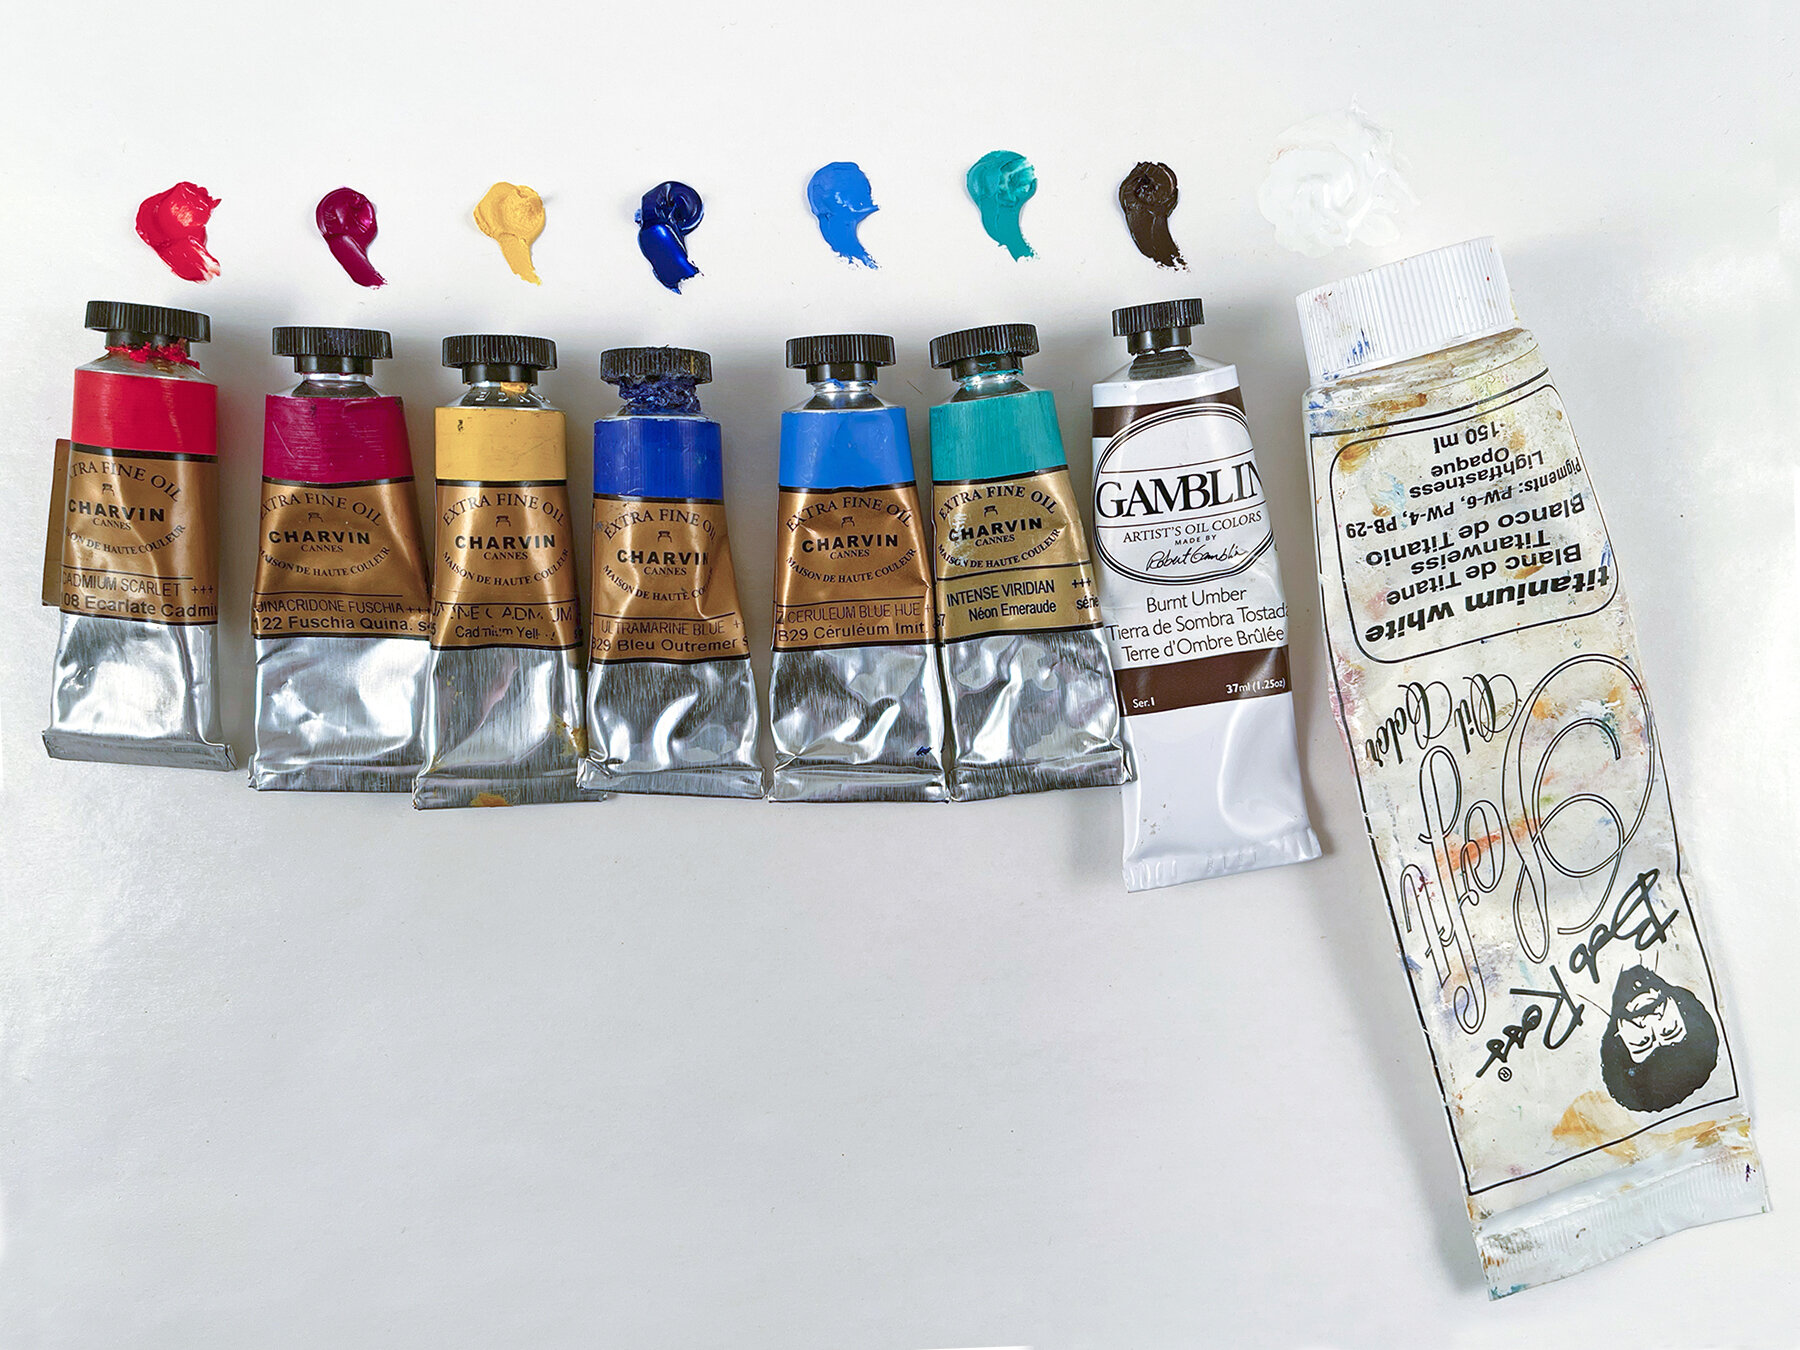 Acro Color Metallic Watercolor Paints Set | 36 Artist Grade Vibrant Vivid Glitter Water Colors with Storage Tin & Brush Premium Art Supplies for